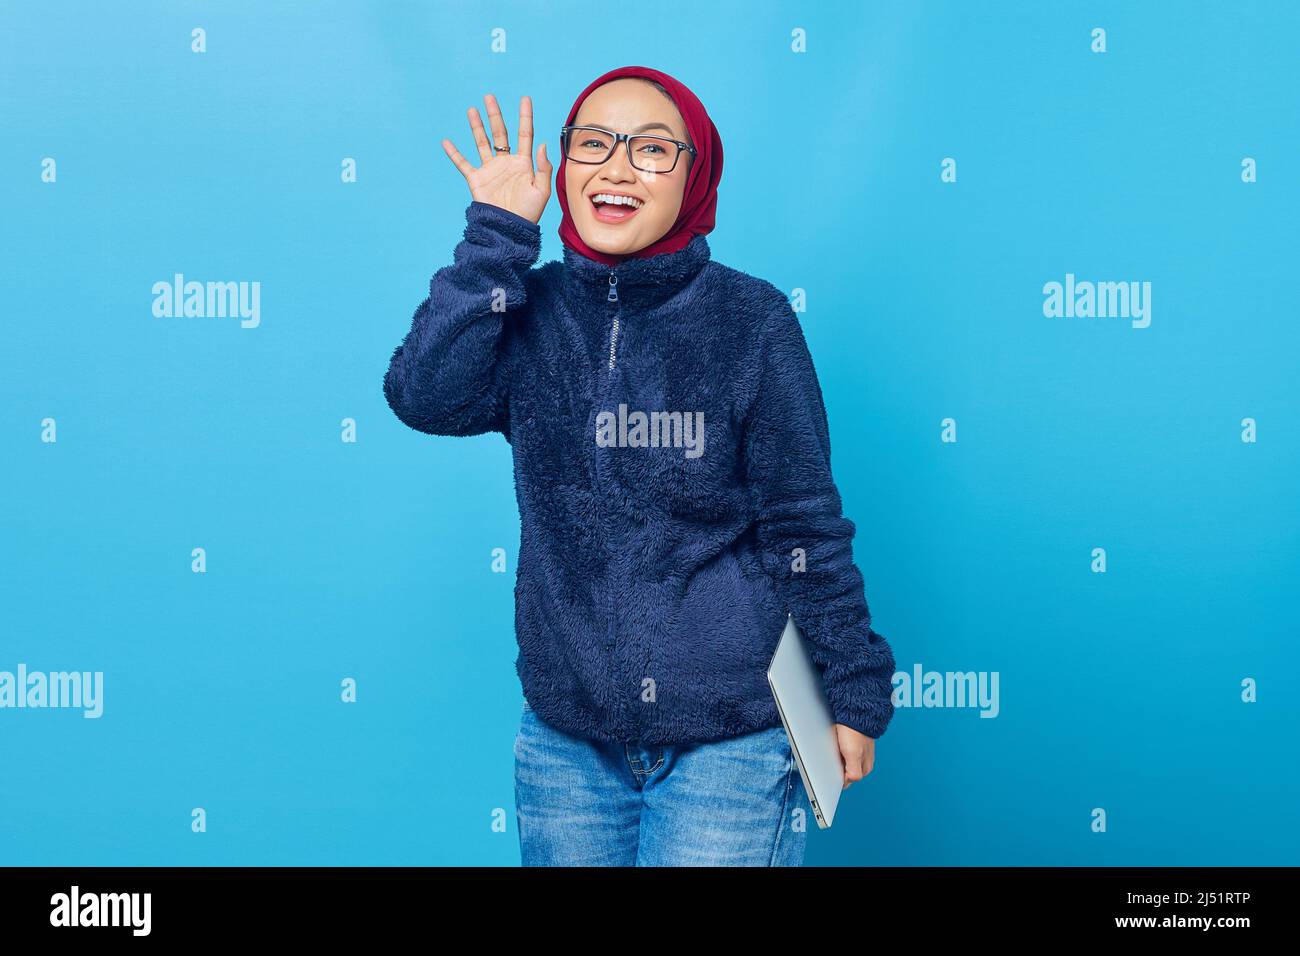 Smiling beautiful student holding laptop while waving to camera on blue background Stock Photo